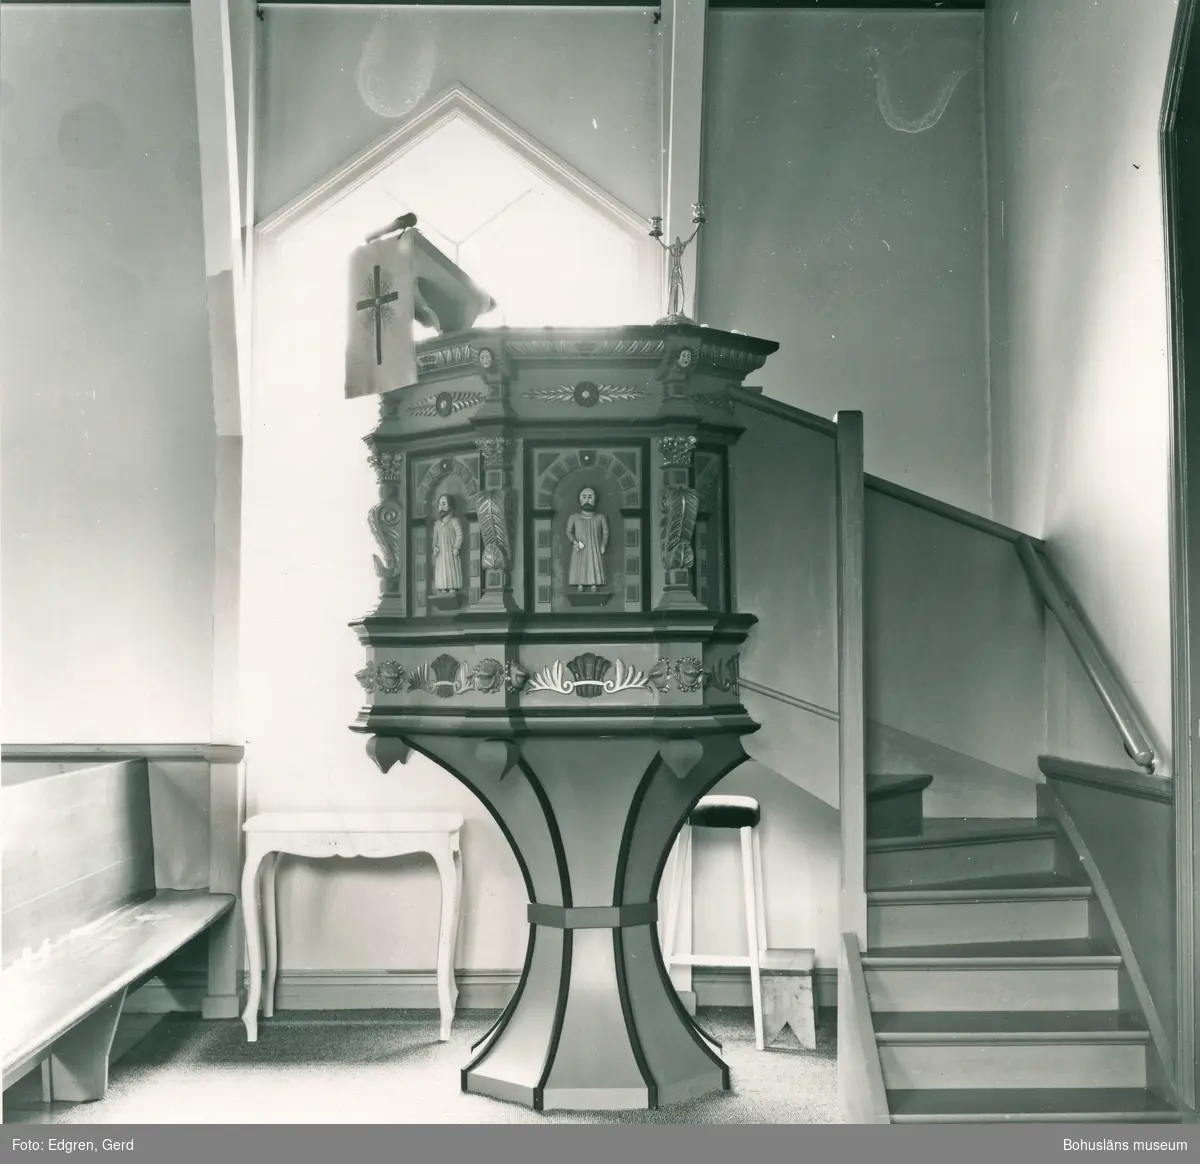 Text till bilden: "Nösunds kapell. Predikstolen".